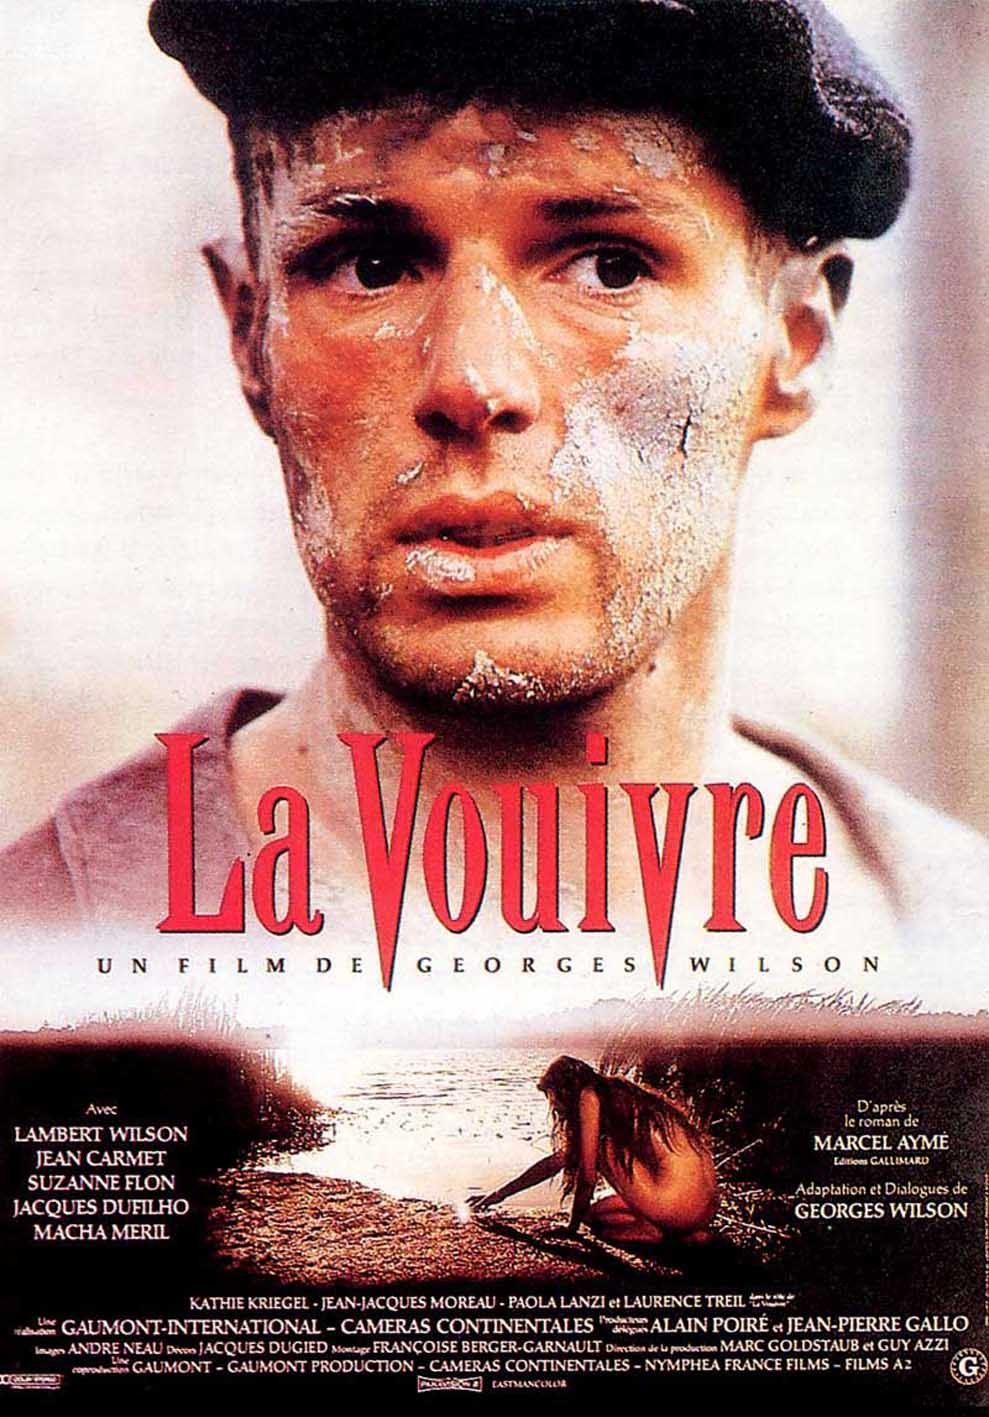 La vouivre (1989) with English Subtitles on DVD on DVD